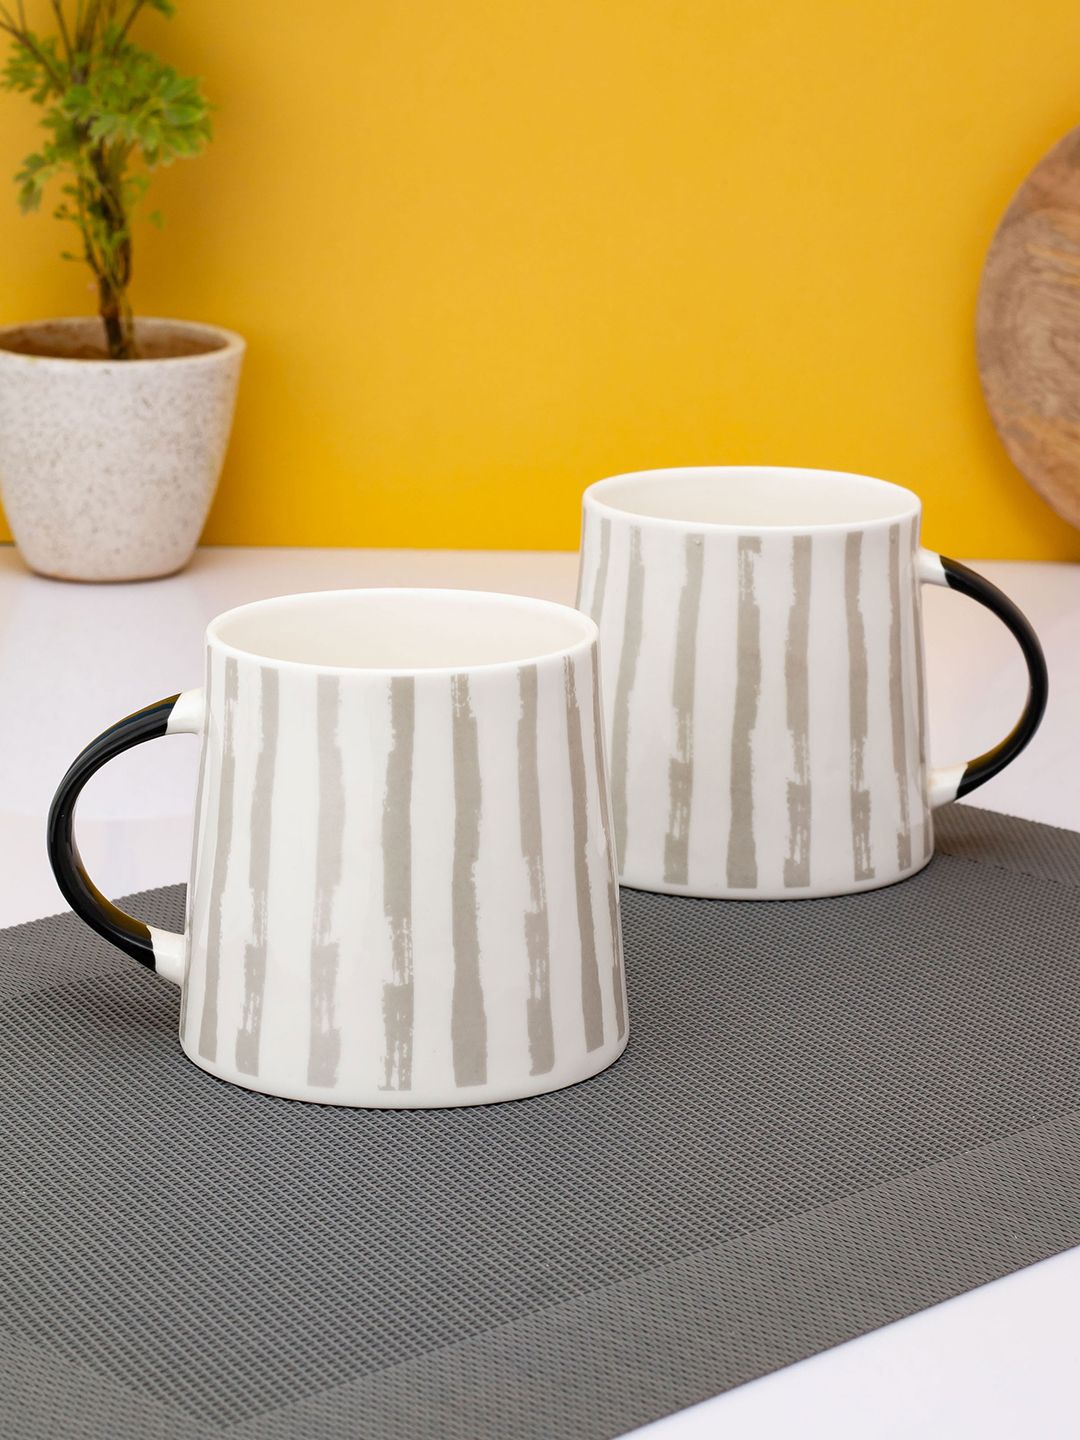 JCPL White & Black Printed Ceramic Glossy Mugs Set of Cups and Mugs Price in India